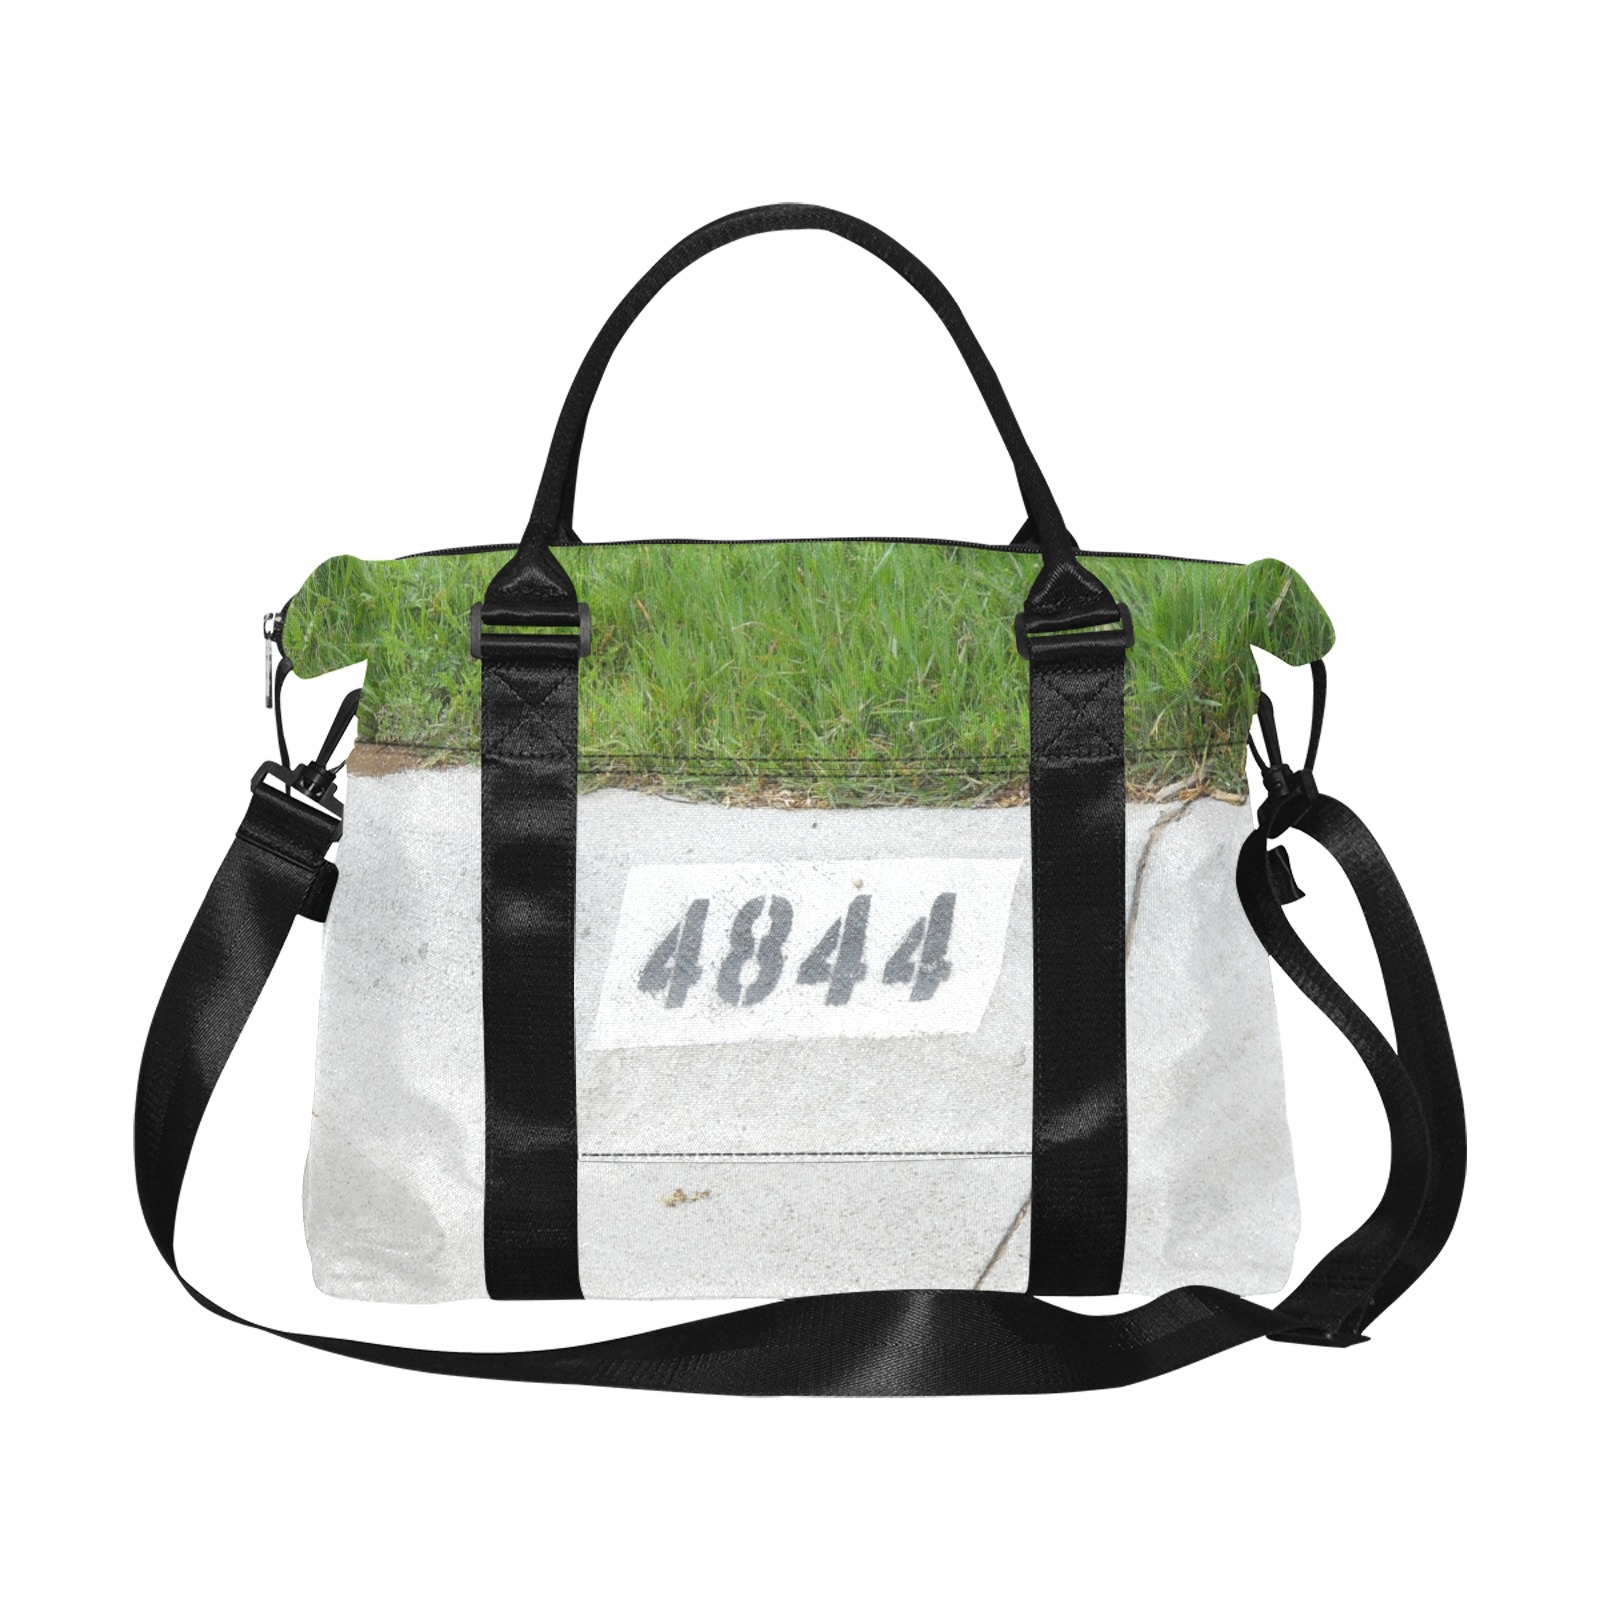 Street Number 4844 Large Capacity Duffle Bag (Model 1715)